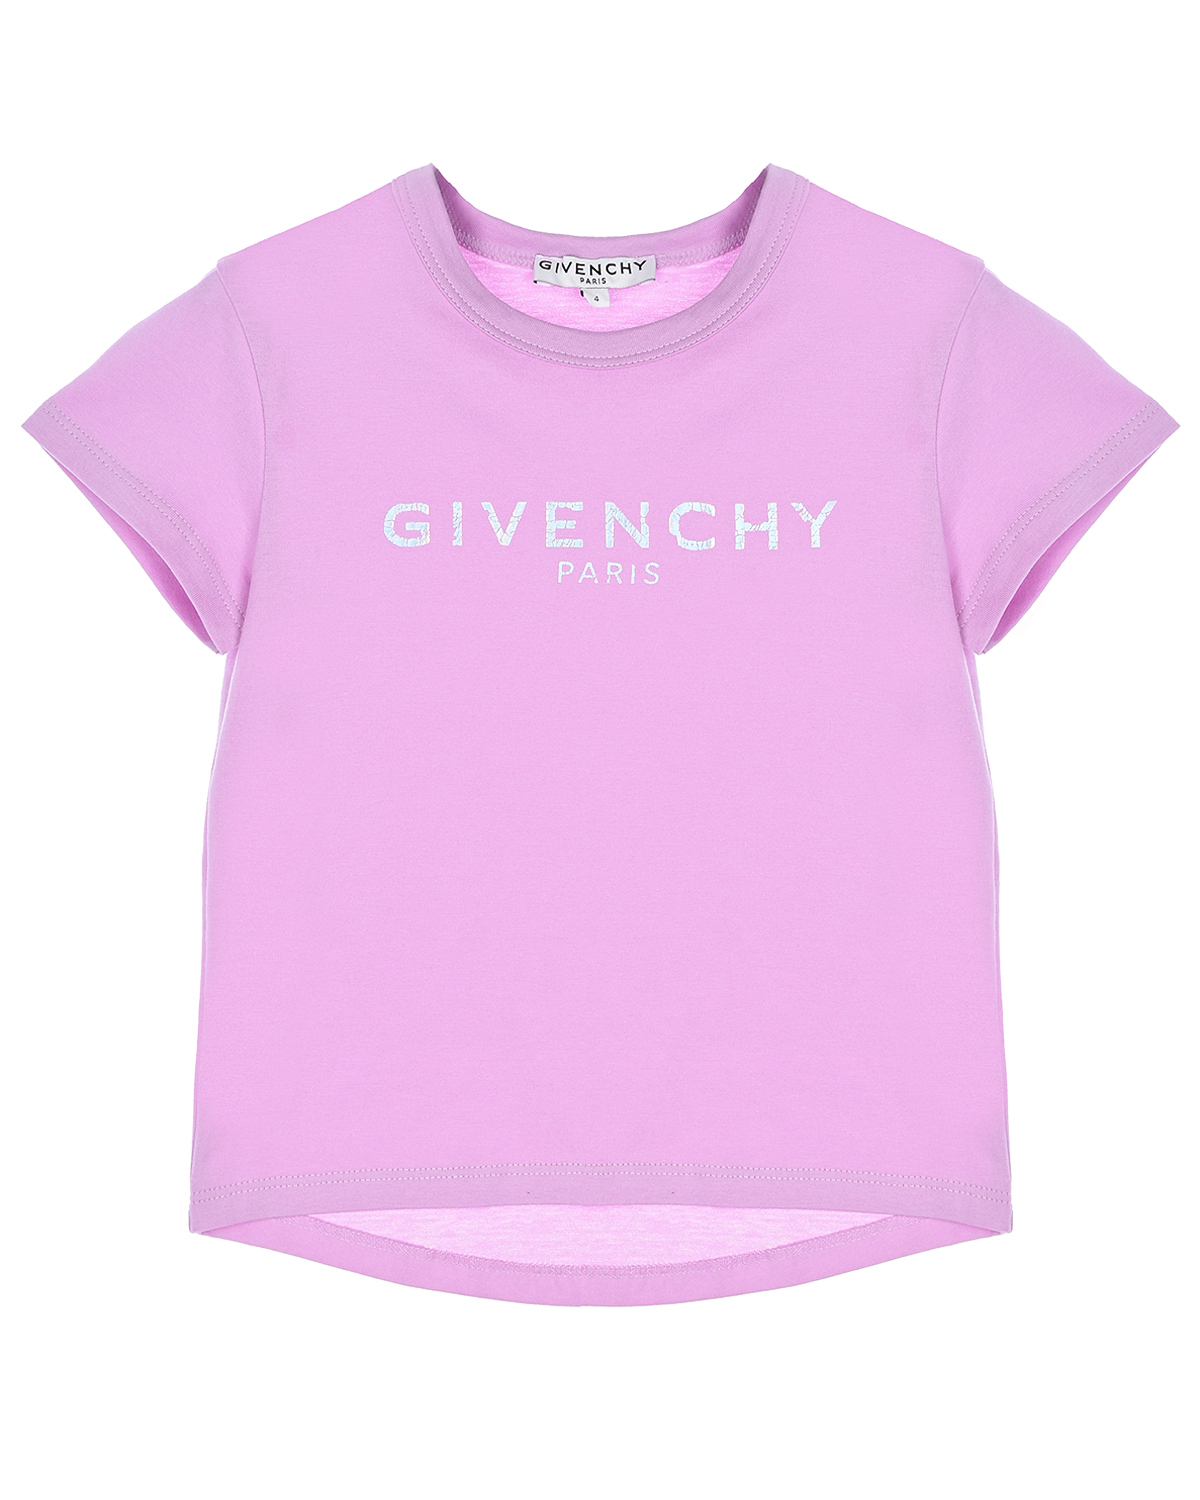 Сиреневая футболка с серебристым логотипом Givenchy